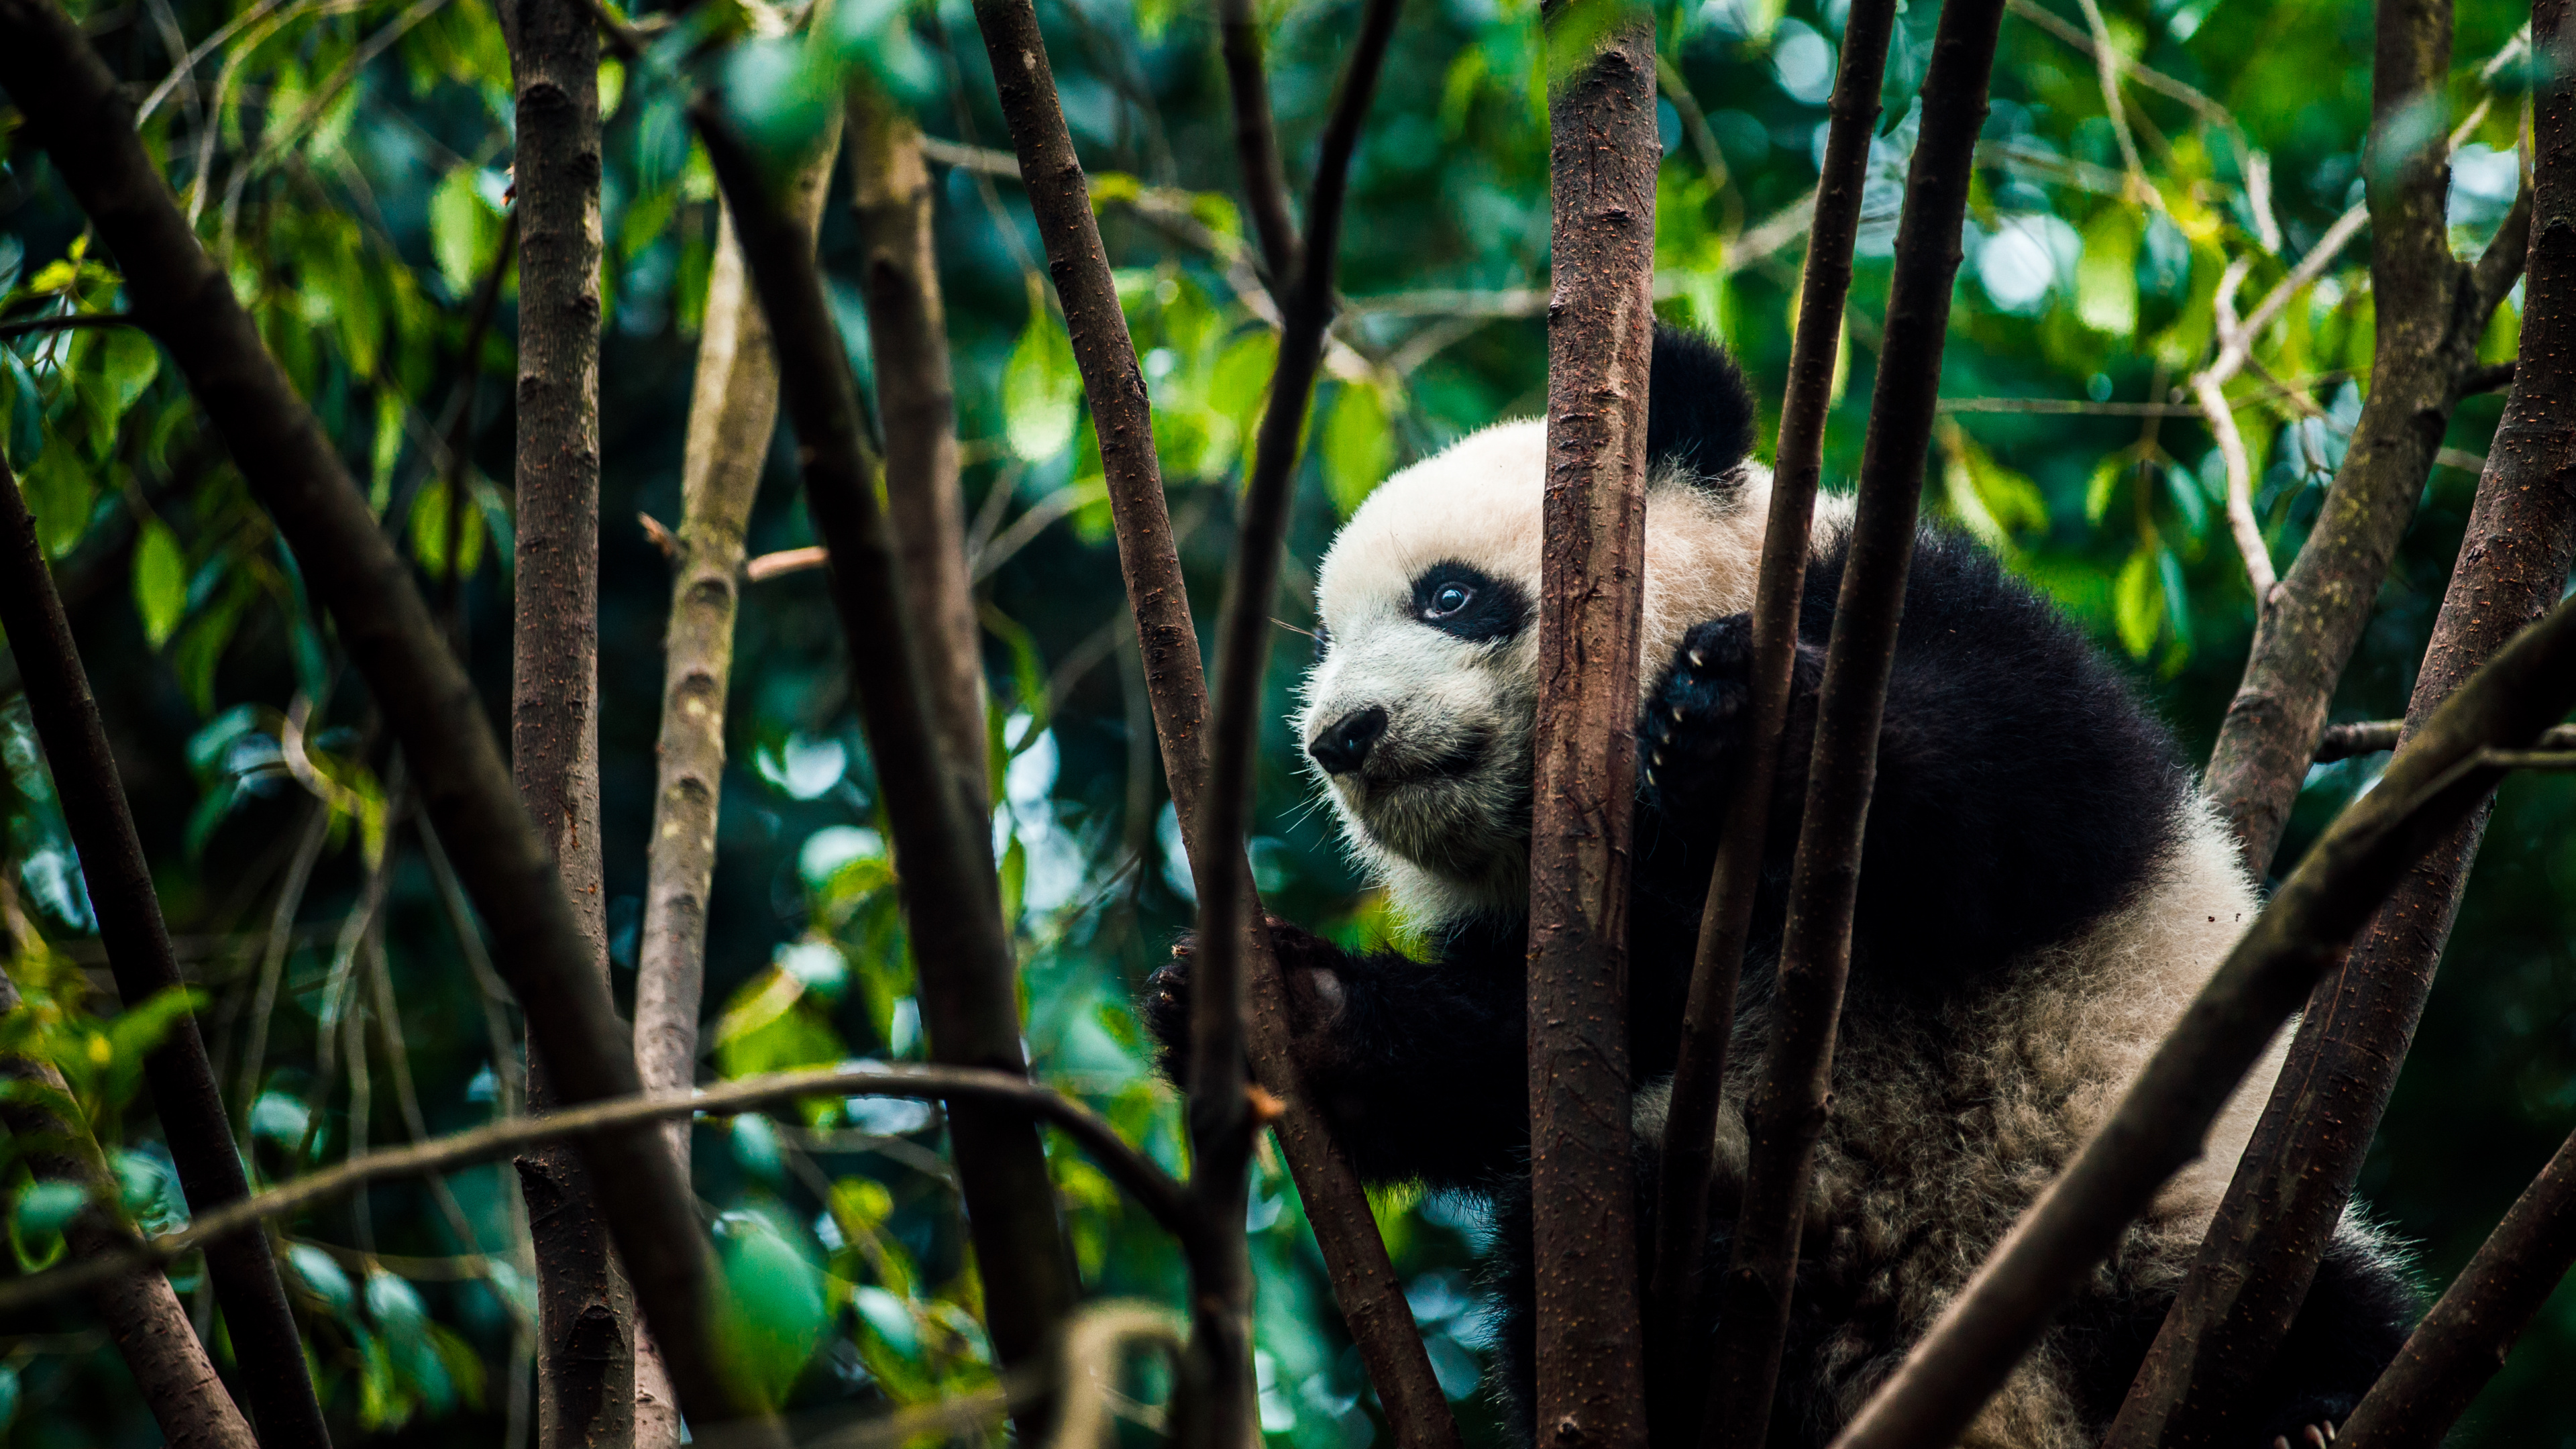 Panda on Tree Branch During Daytime. Wallpaper in 3840x2160 Resolution